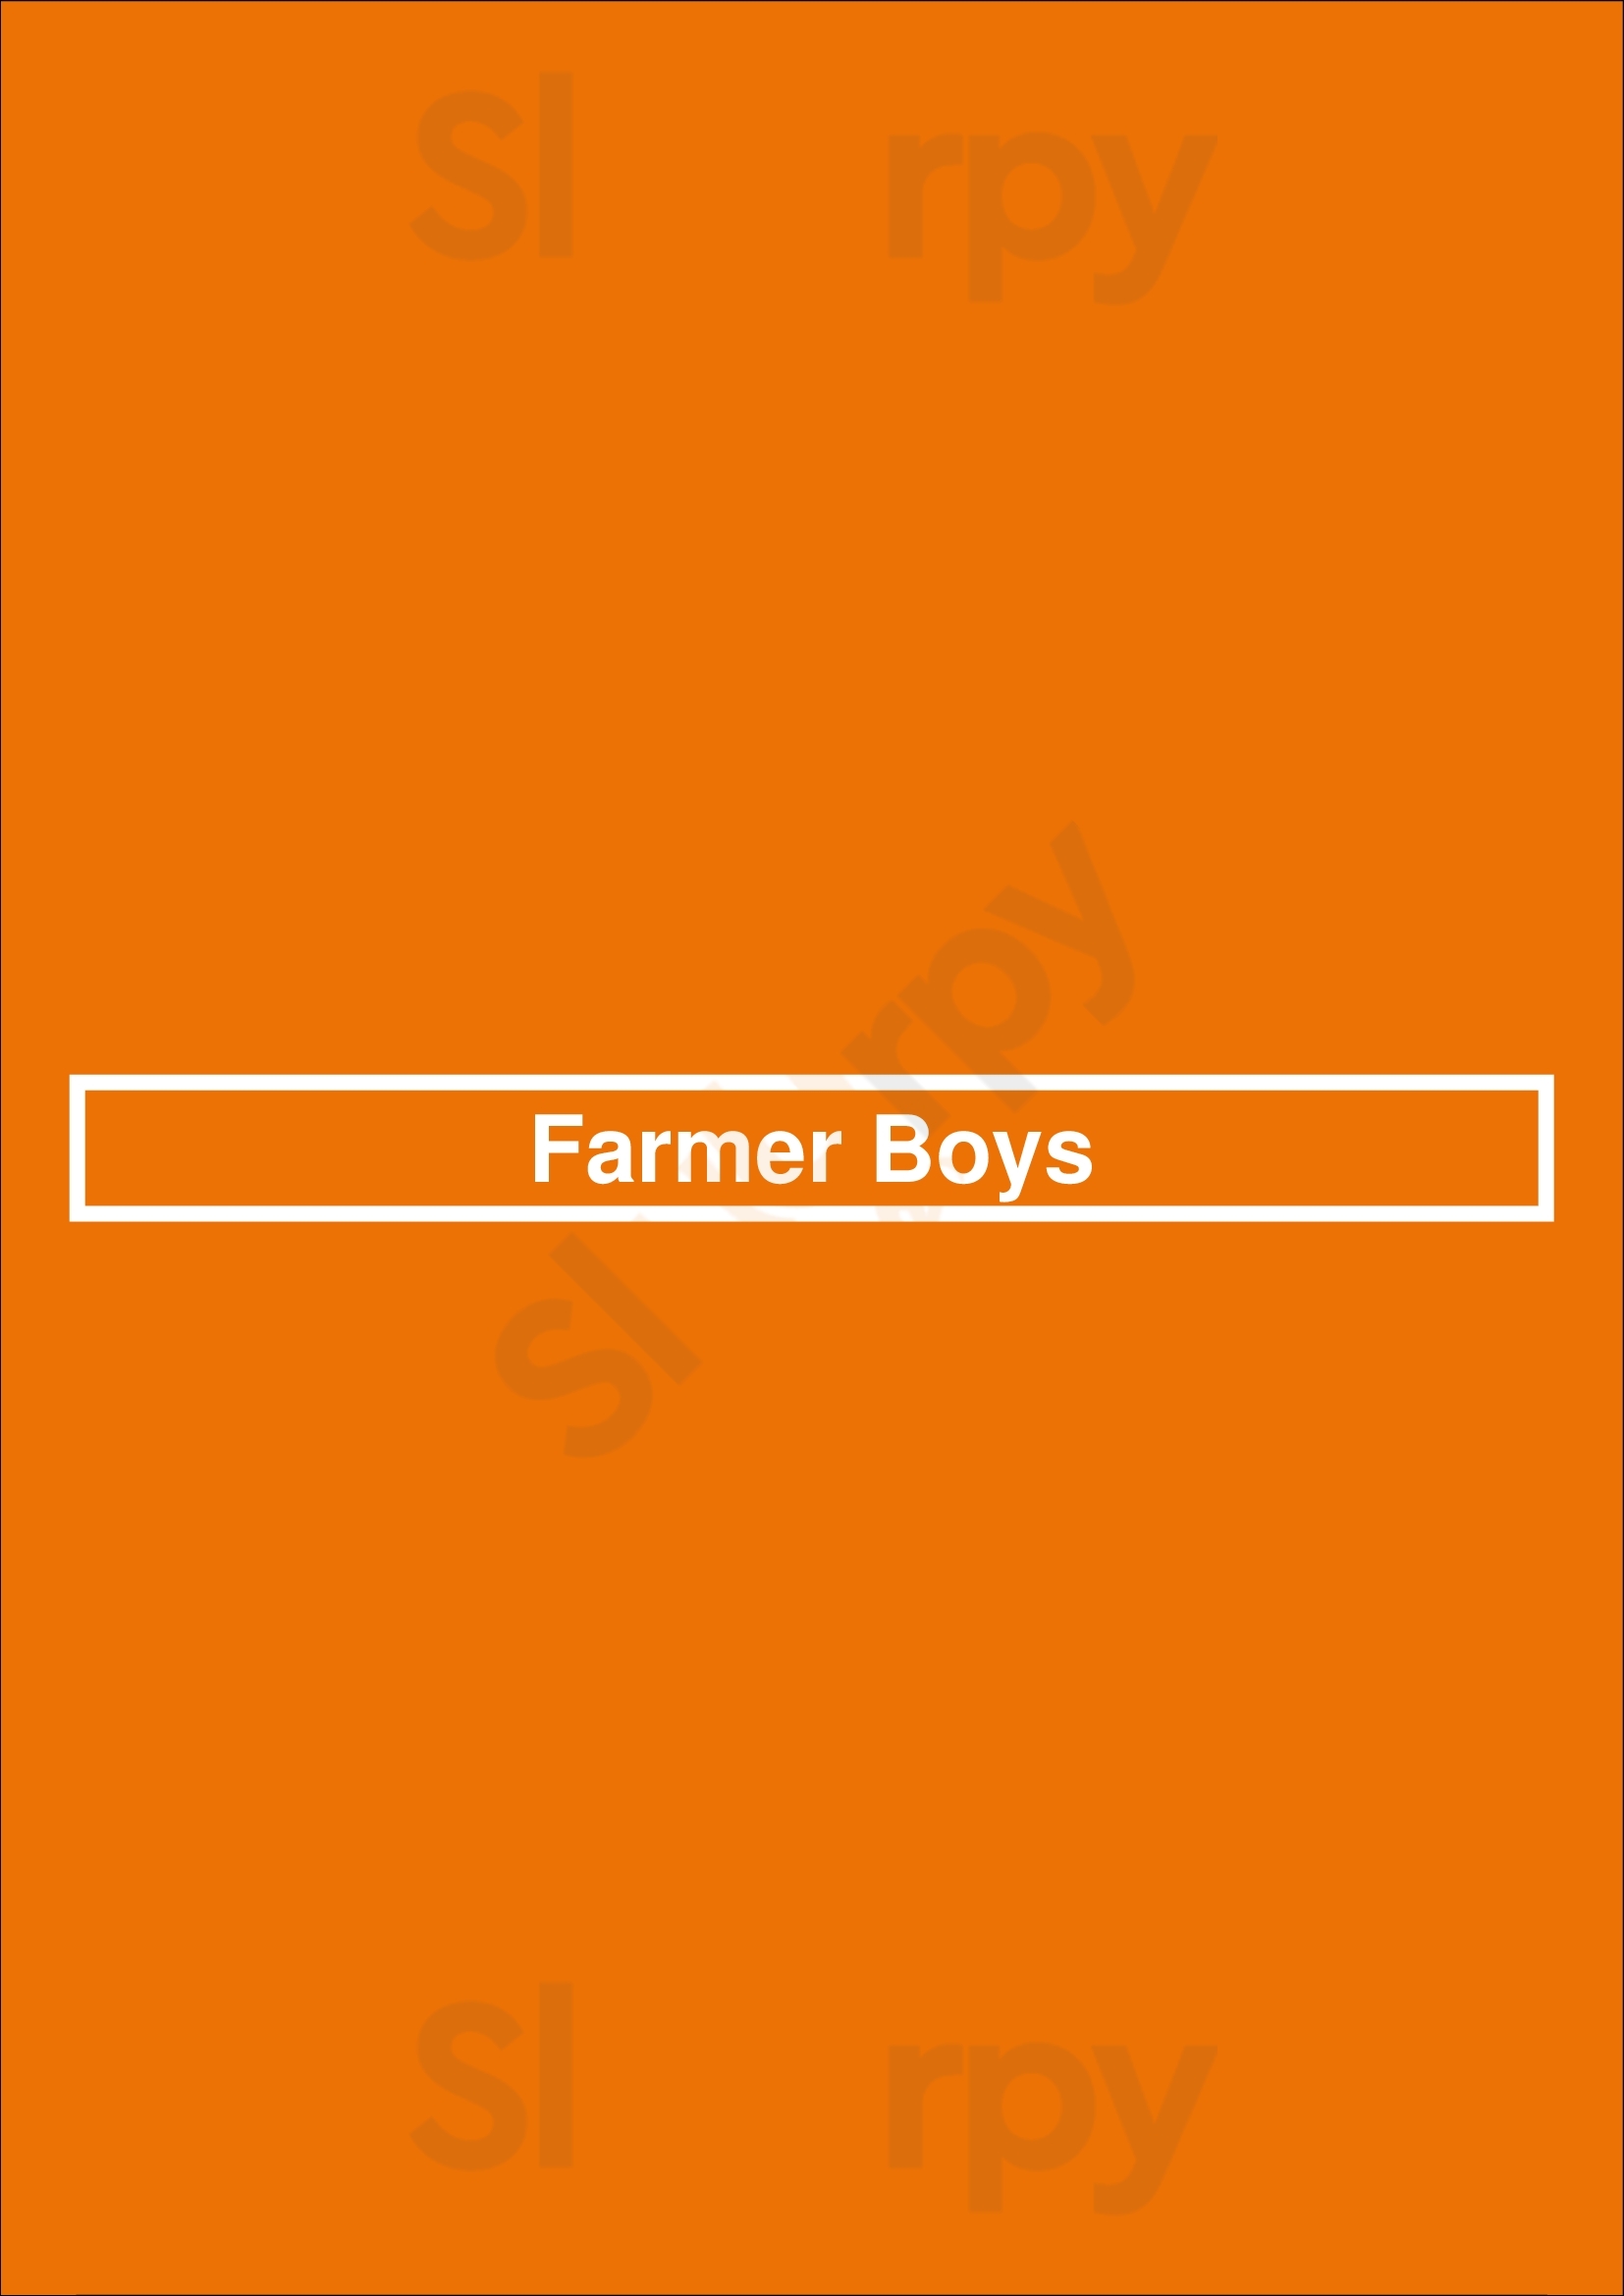 Farmer Boys Los Angeles Menu - 1